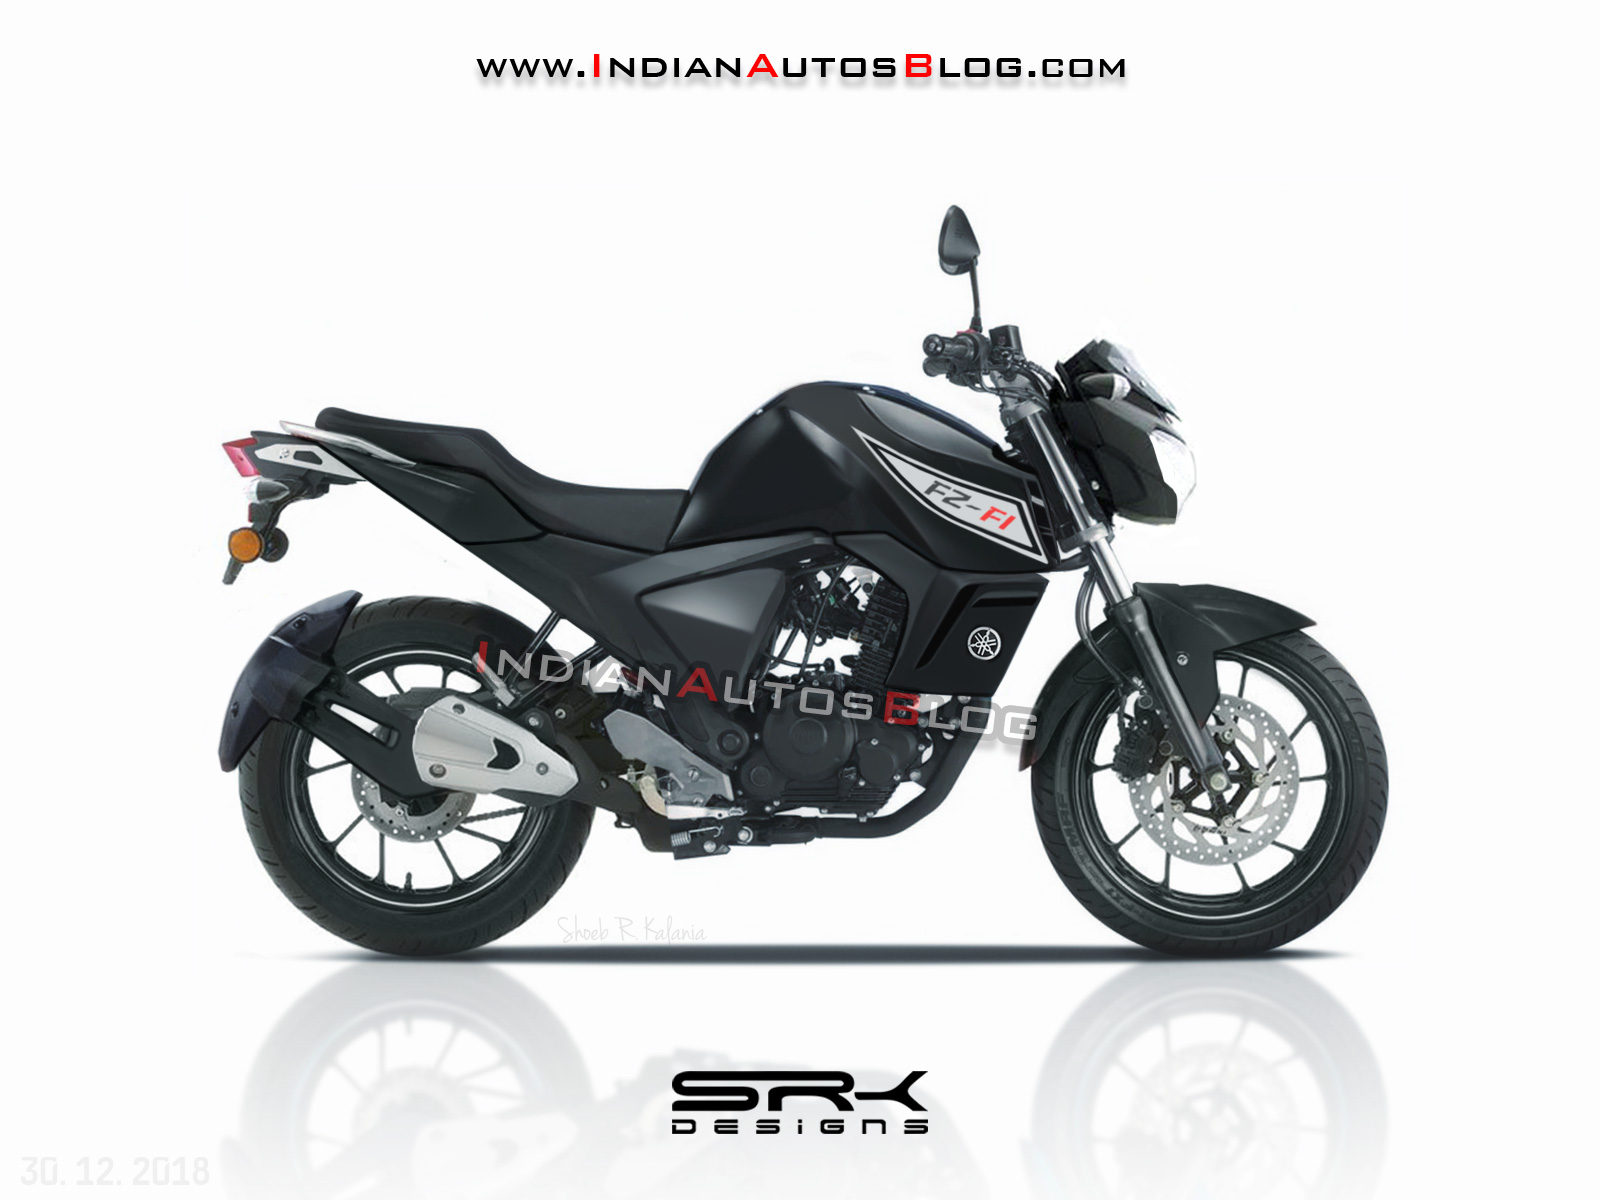 Upcoming Motorcycles In 2019 Yamaha Fz V3 New Bajaj Dominar 400